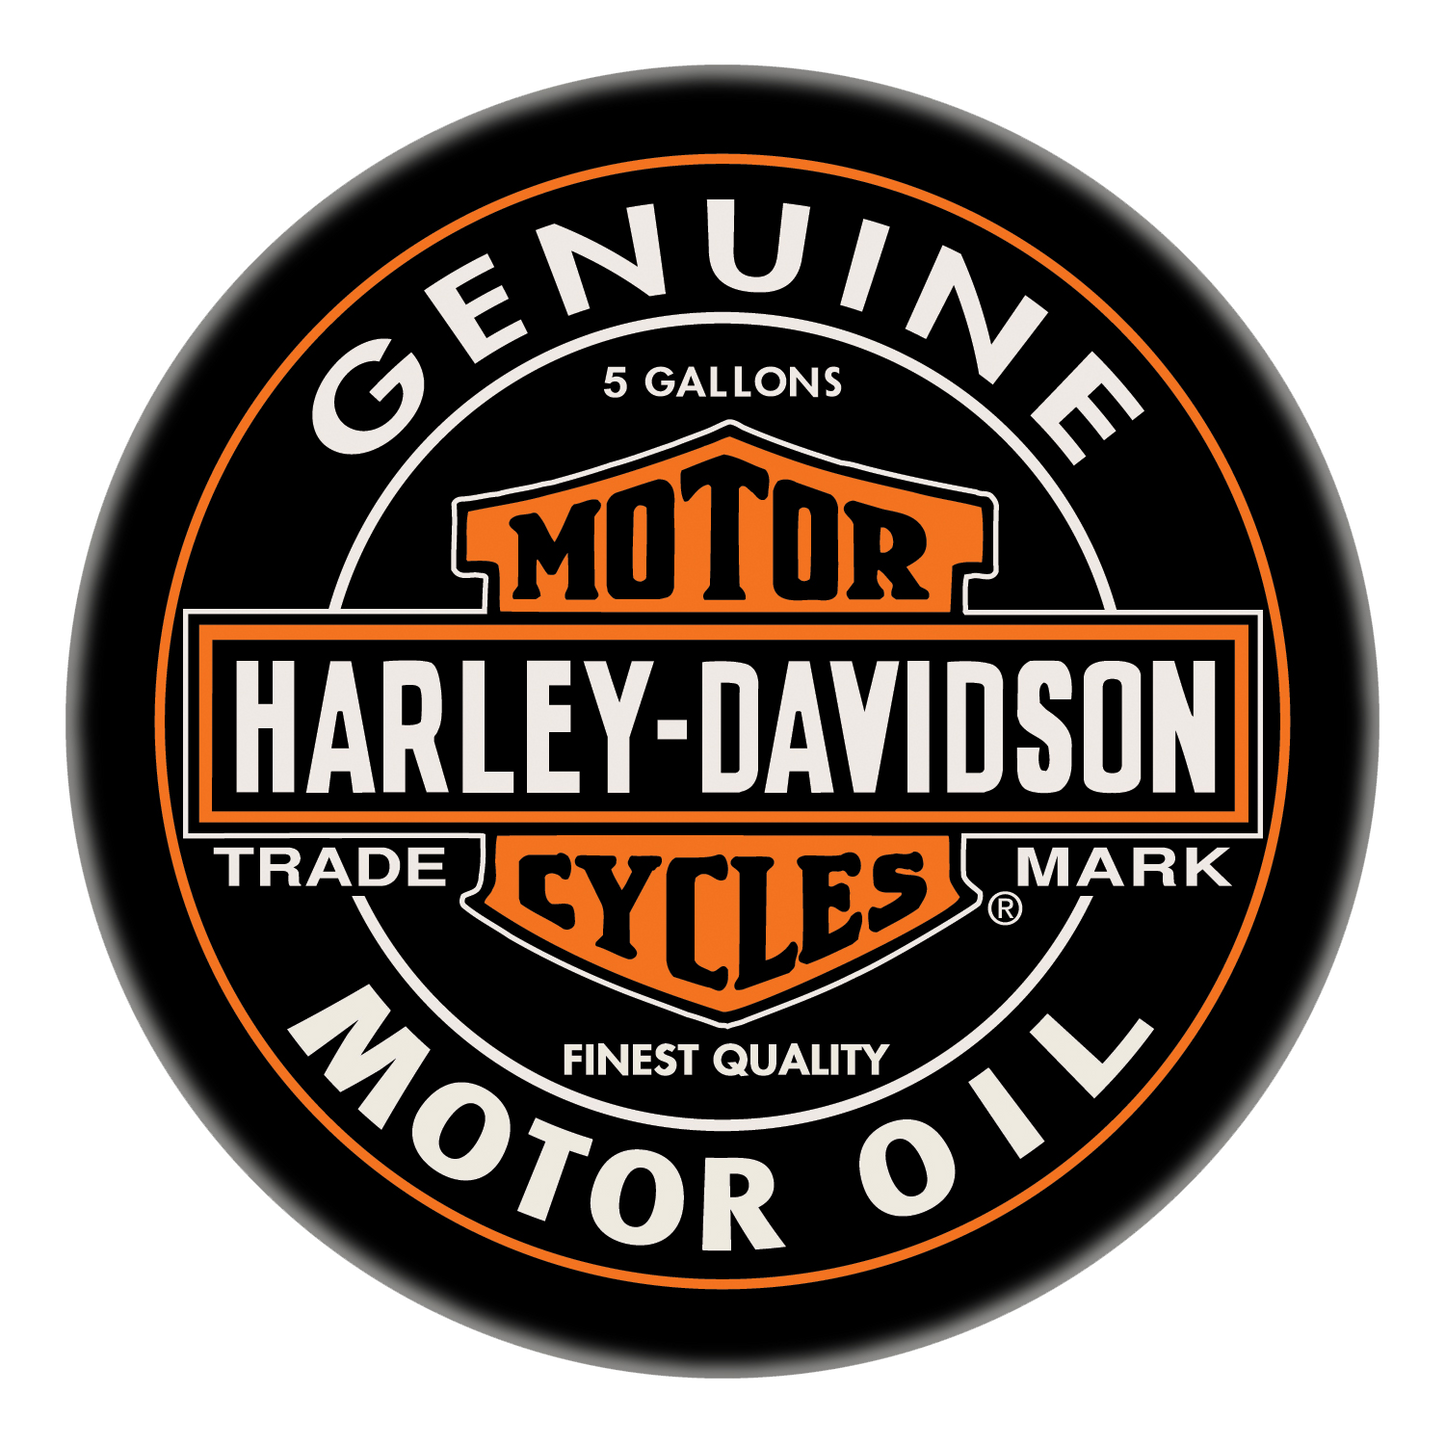 Harley Davidson Oil Can Bar Stool with Backrest